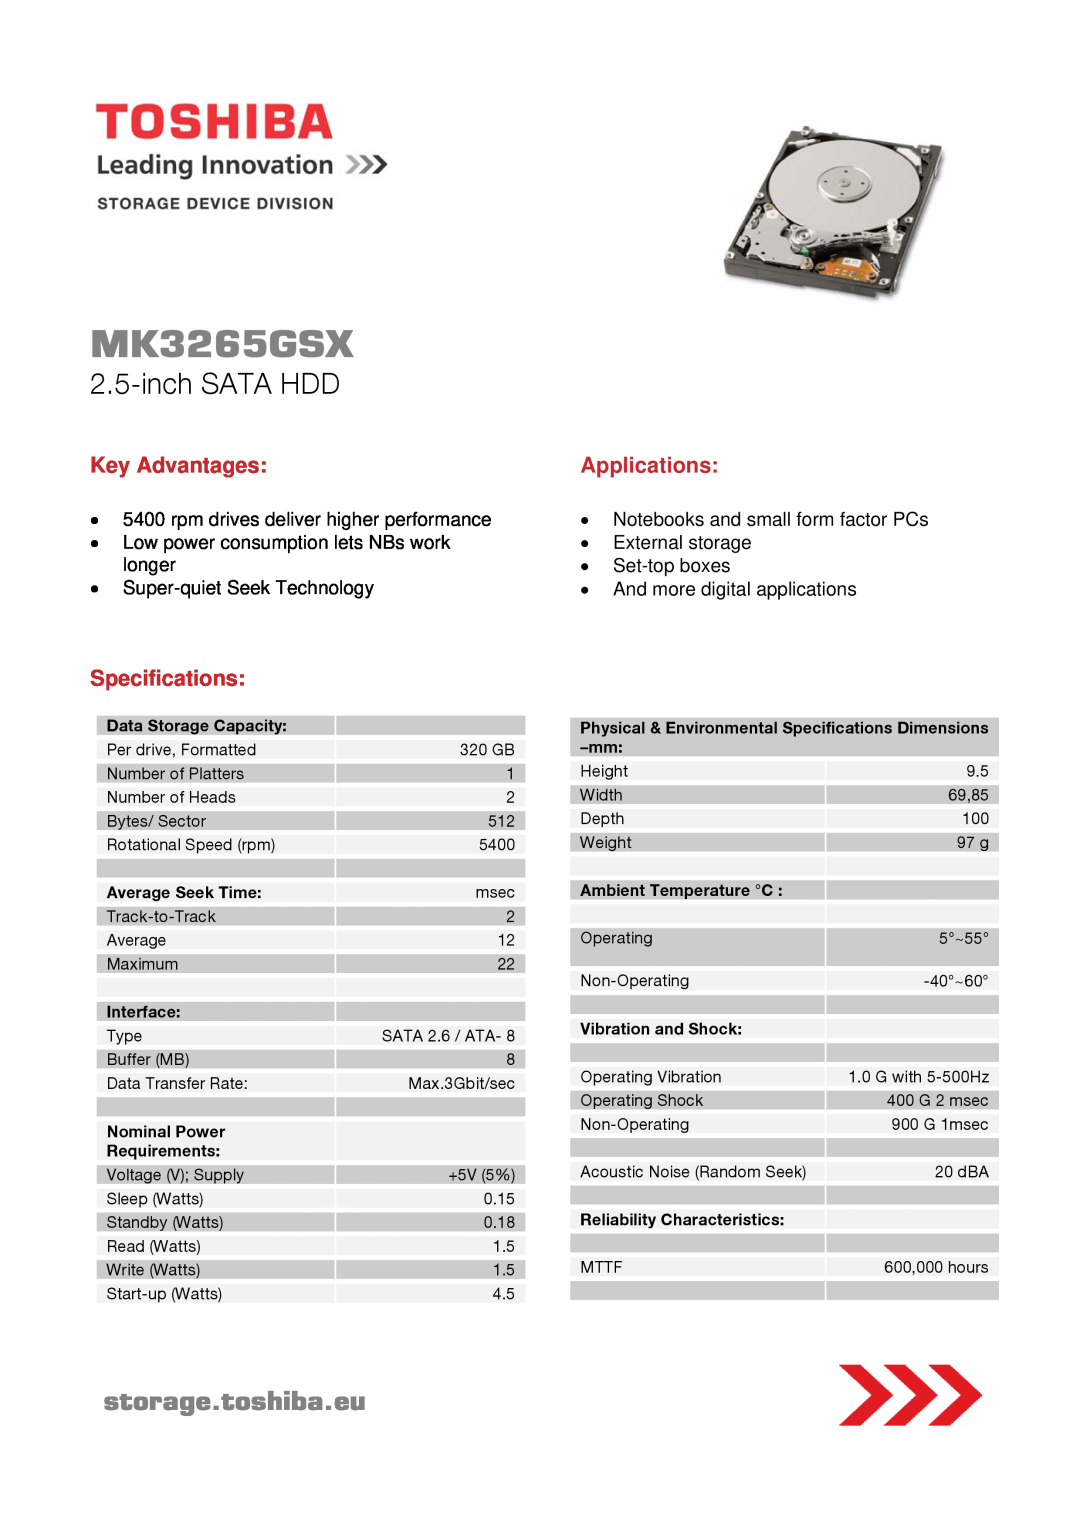 Toshiba MK3265GSX specifications inch SATA HDD, storage.toshiba.eu, Key Advantages, Applications, Specifications, longer 